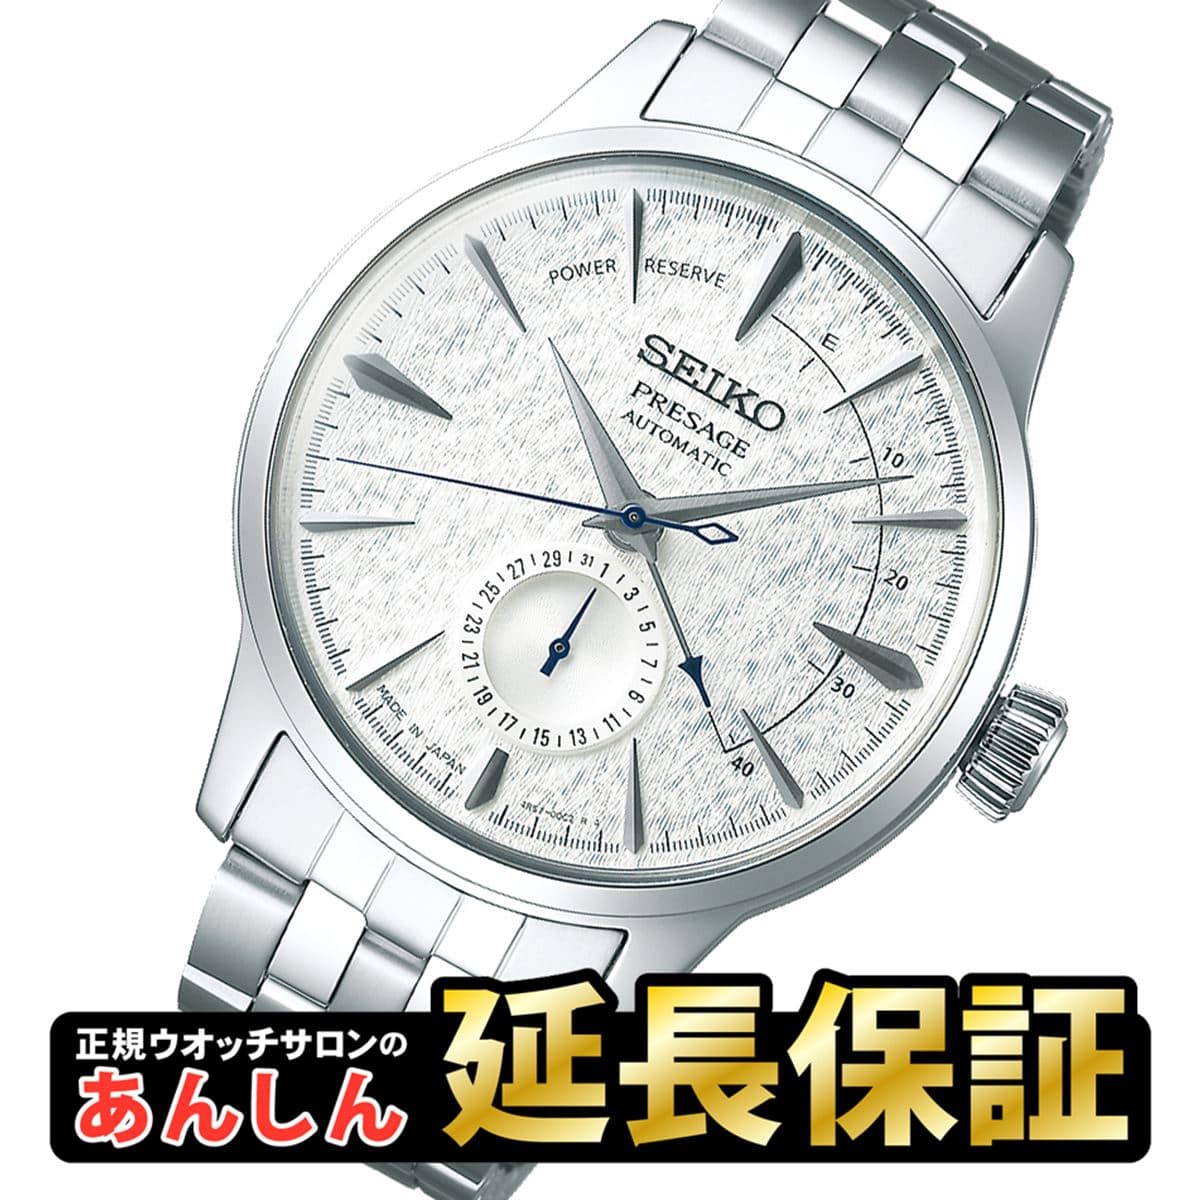 New] SEIKO Presage SARY105 STAR BAR-limited model self-winding watch  mechanical basic line men watch SEIKO PRESAGE [1118] _10spl - BE FORWARD  Store